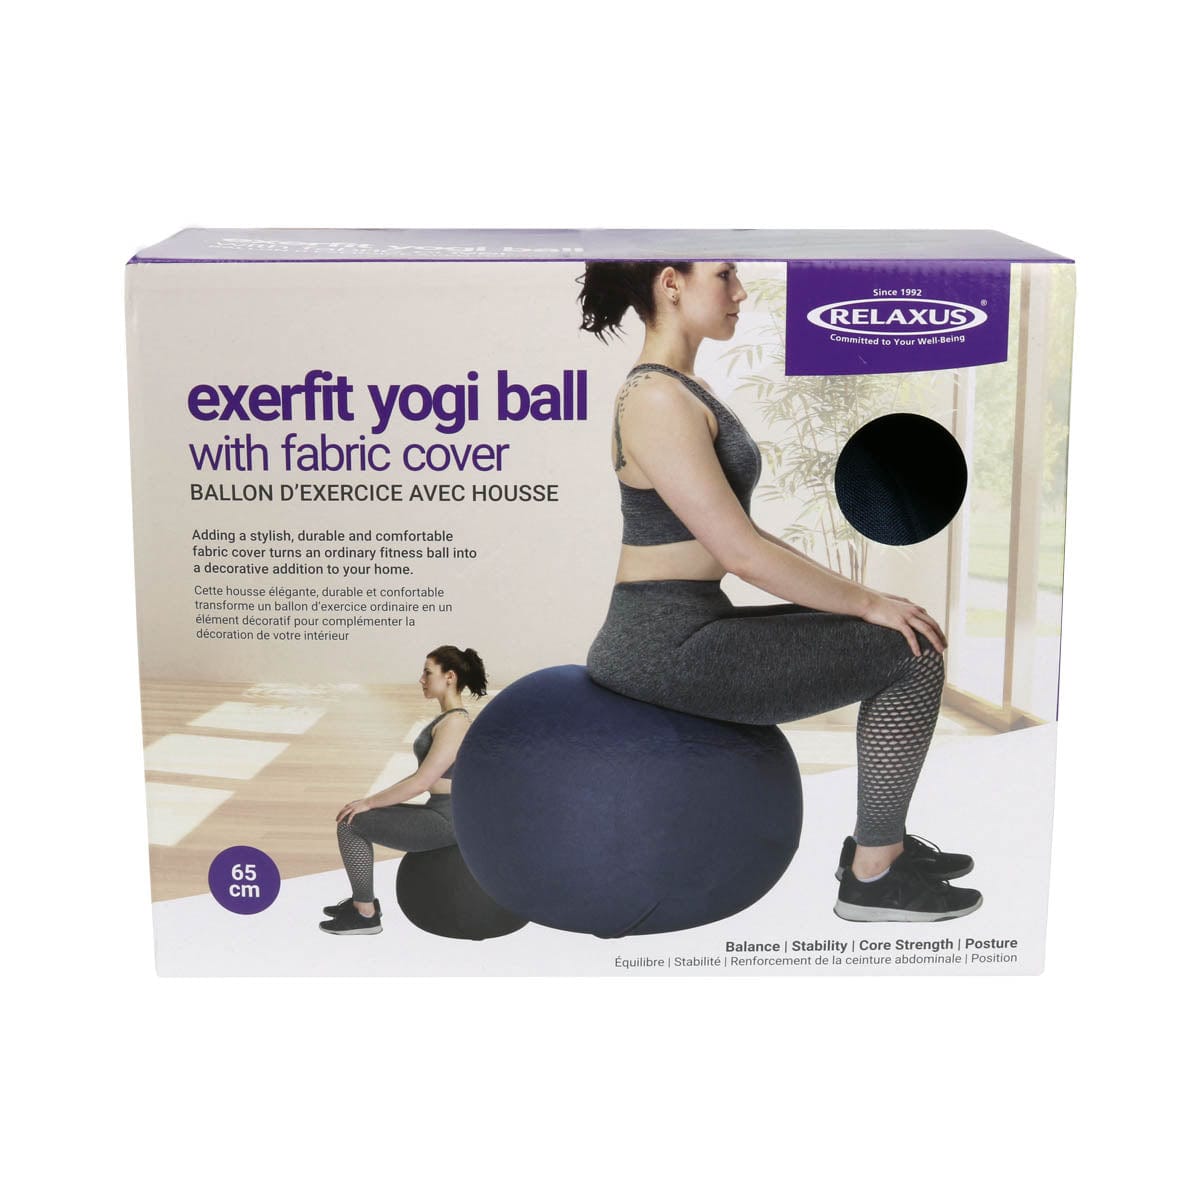 Exerfit Yogi Ball with Fabric Cover box